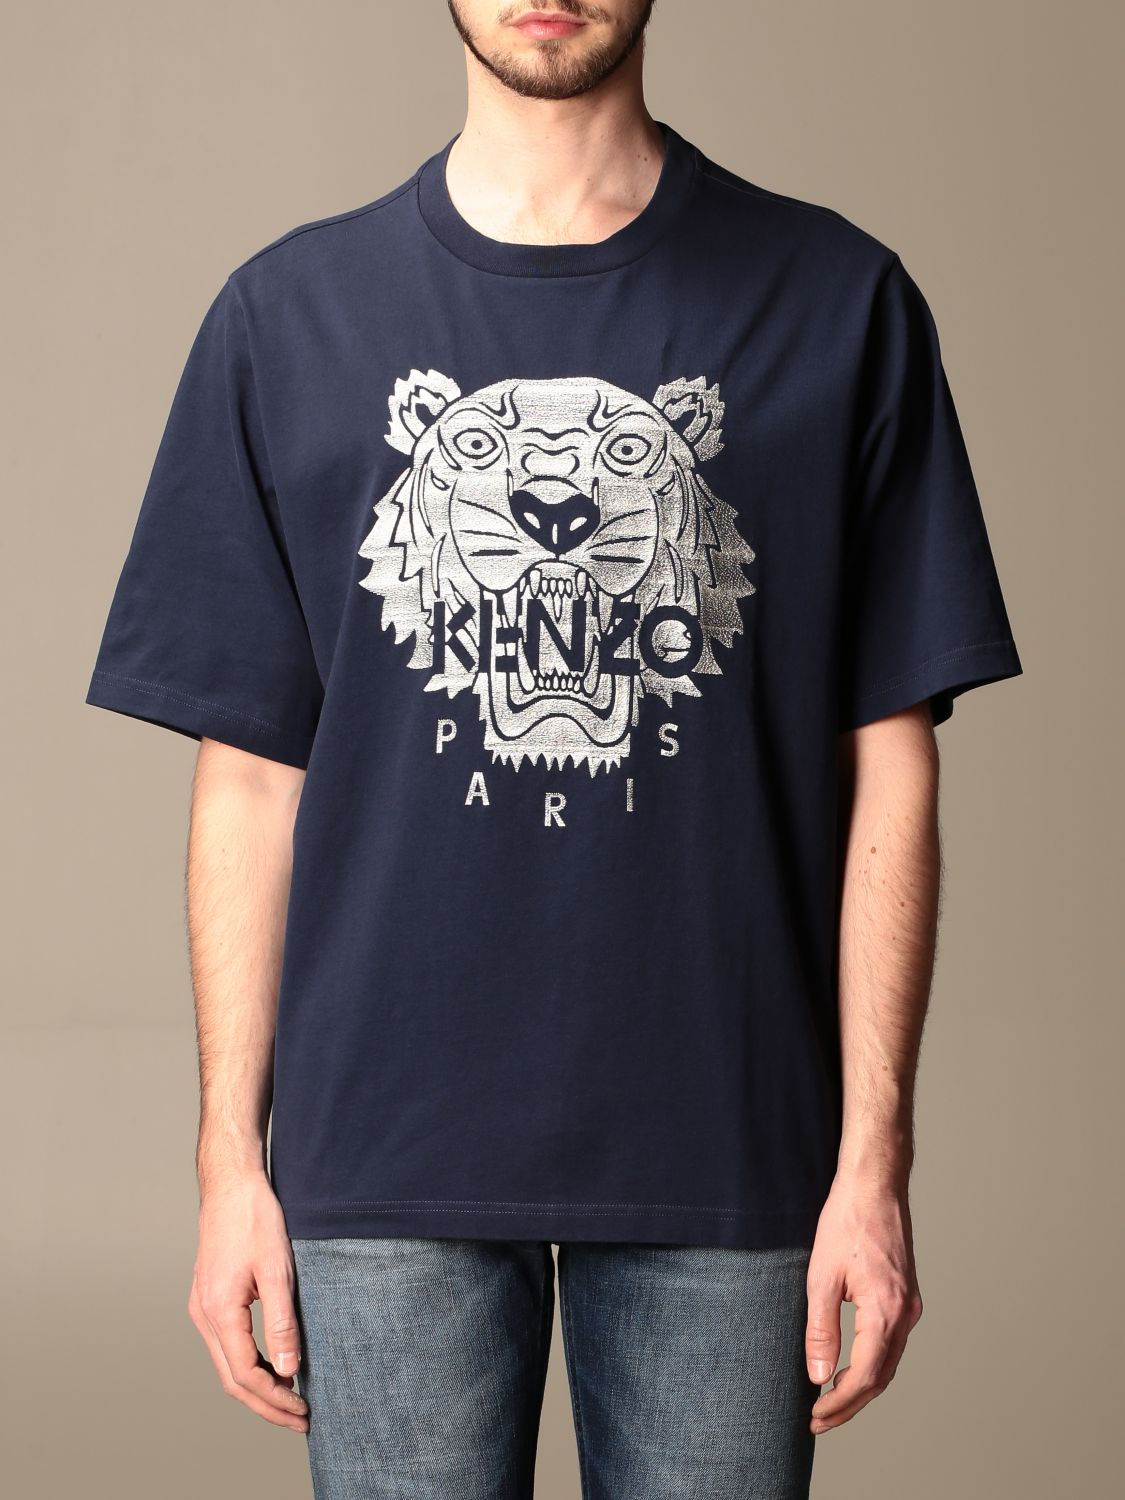 kenzo t shirt fit